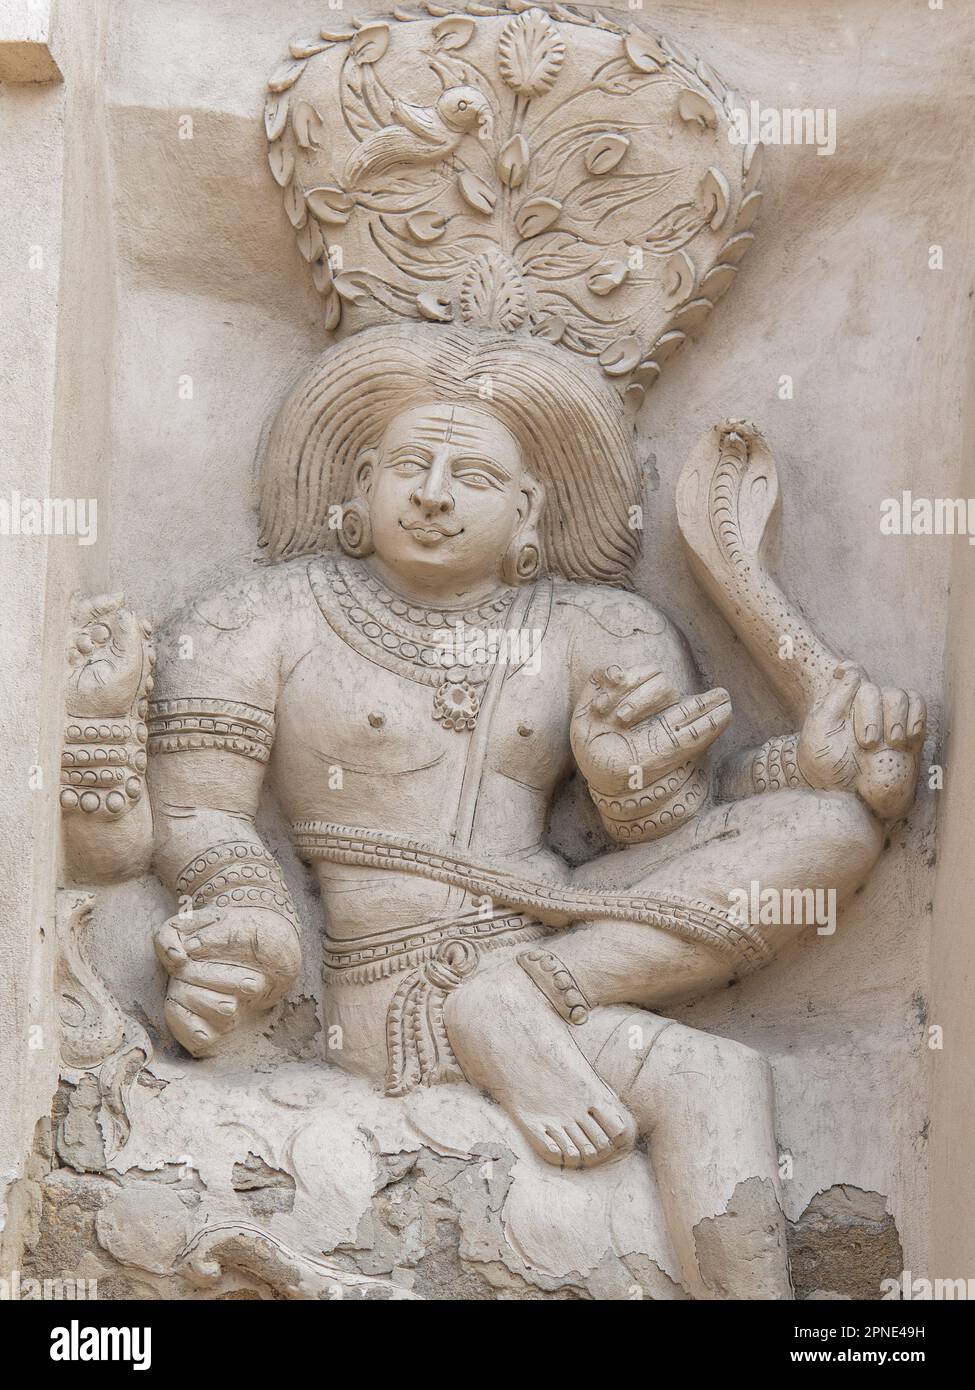 Ancienne sculpture de lord shiva au temple de Kailasanatha, Kanchipuram (Kancheepuram Kanjivaram), Tamil-Nadu, Inde. Banque D'Images